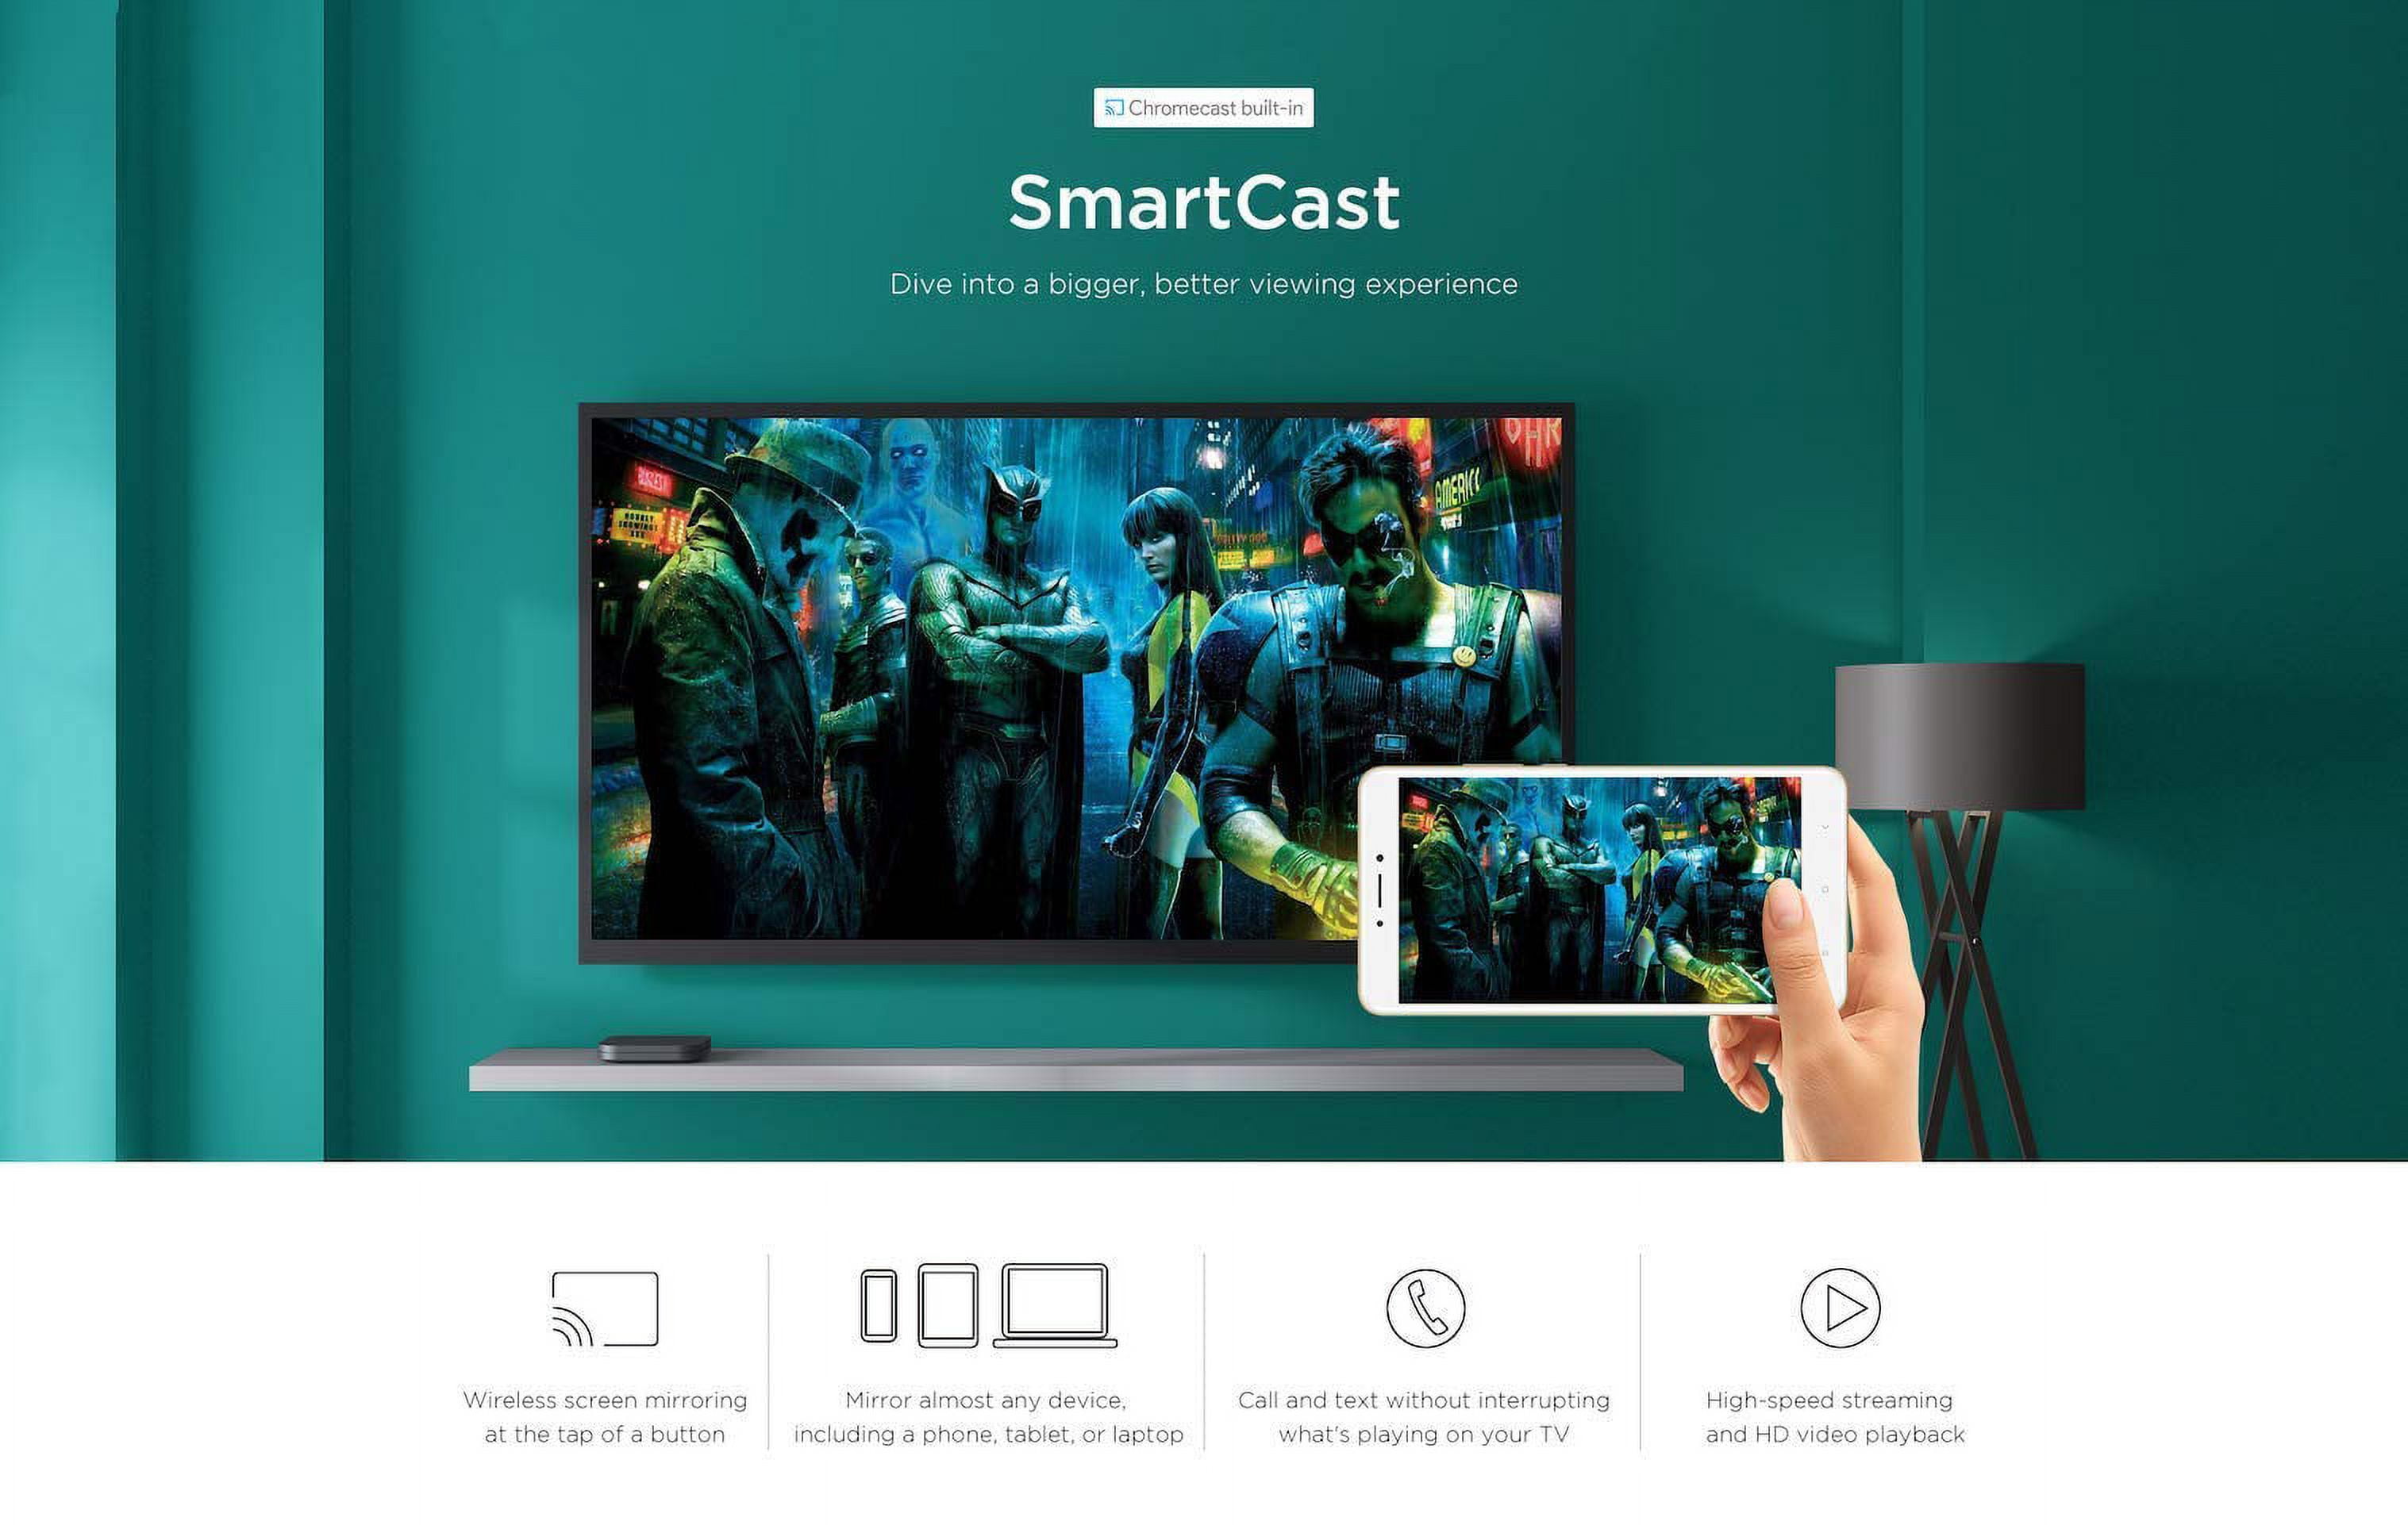 Xiaomi Mi Box S 4K Android TV HDR Wireless Streamer Smart Streaming Media  Player